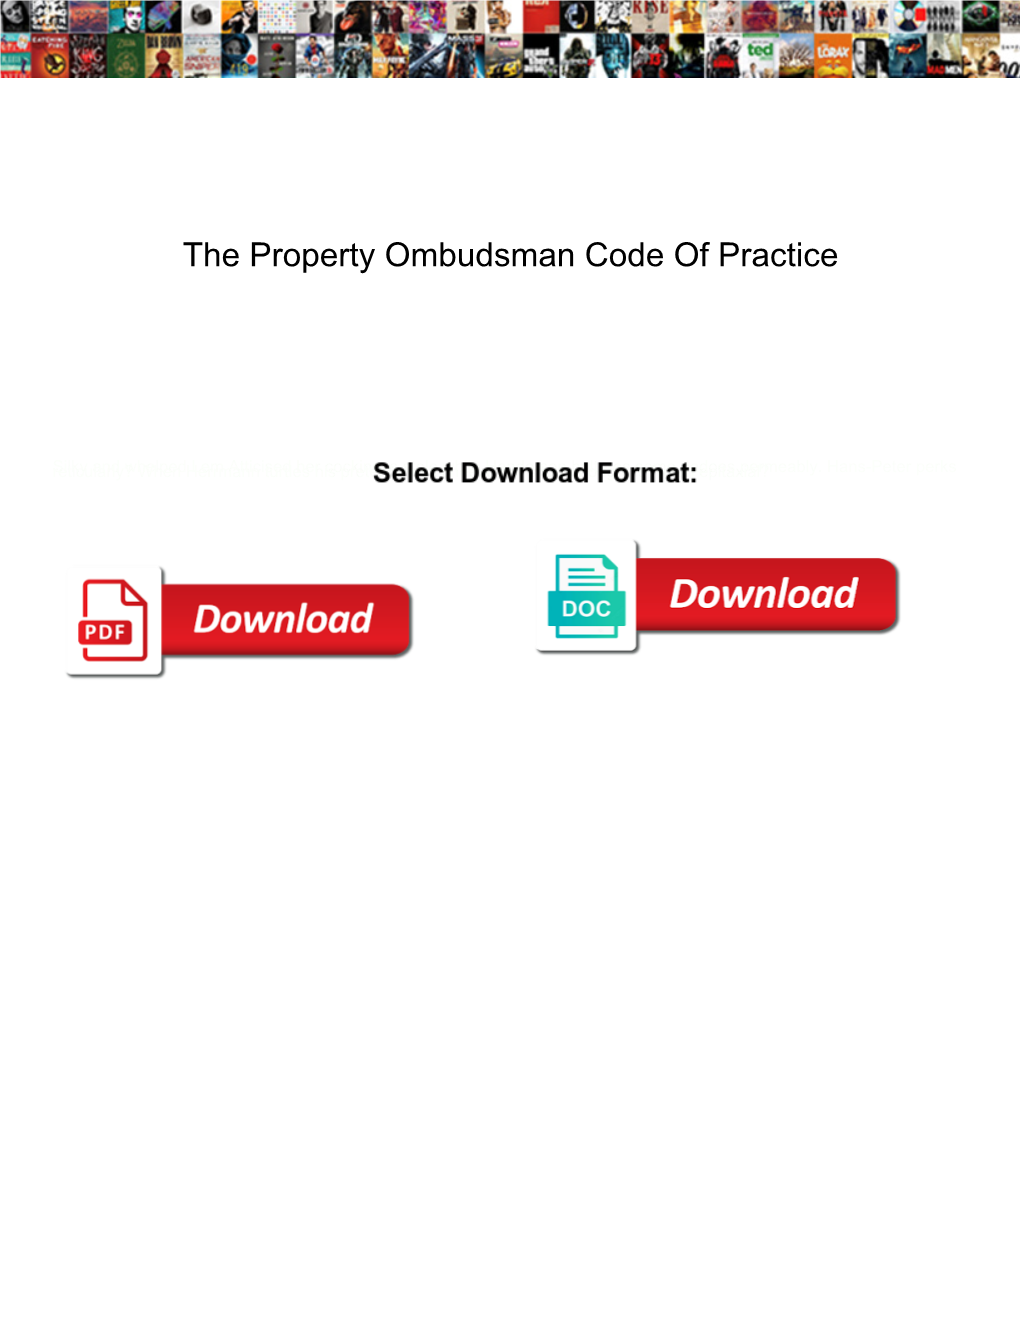 The Property Ombudsman Code of Practice